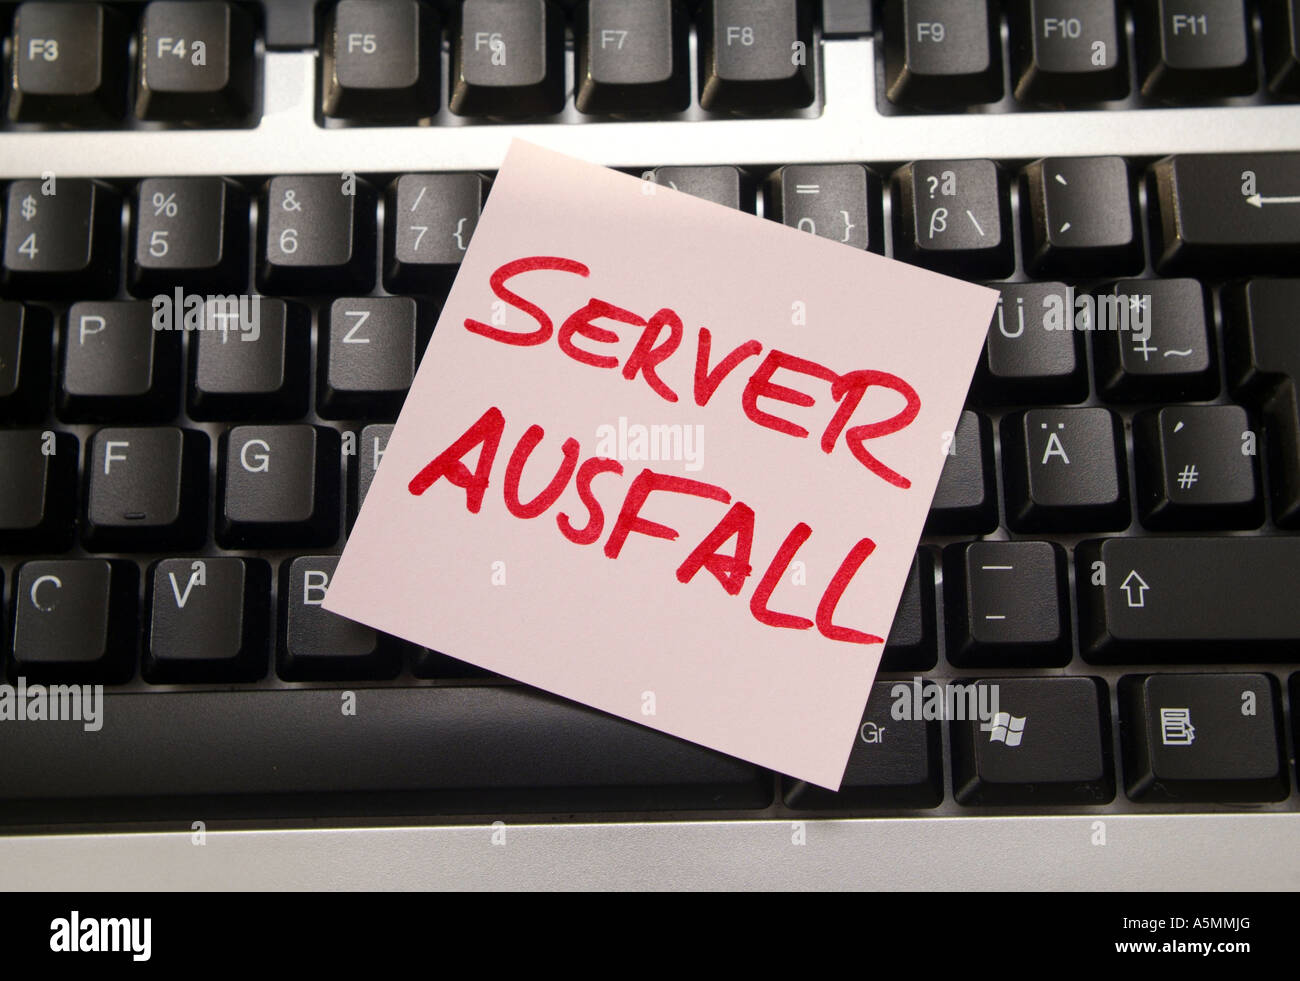 Server Ausfall Post It auf Computertastatur Server Breakdown notice on computer keyboard Stock Photo